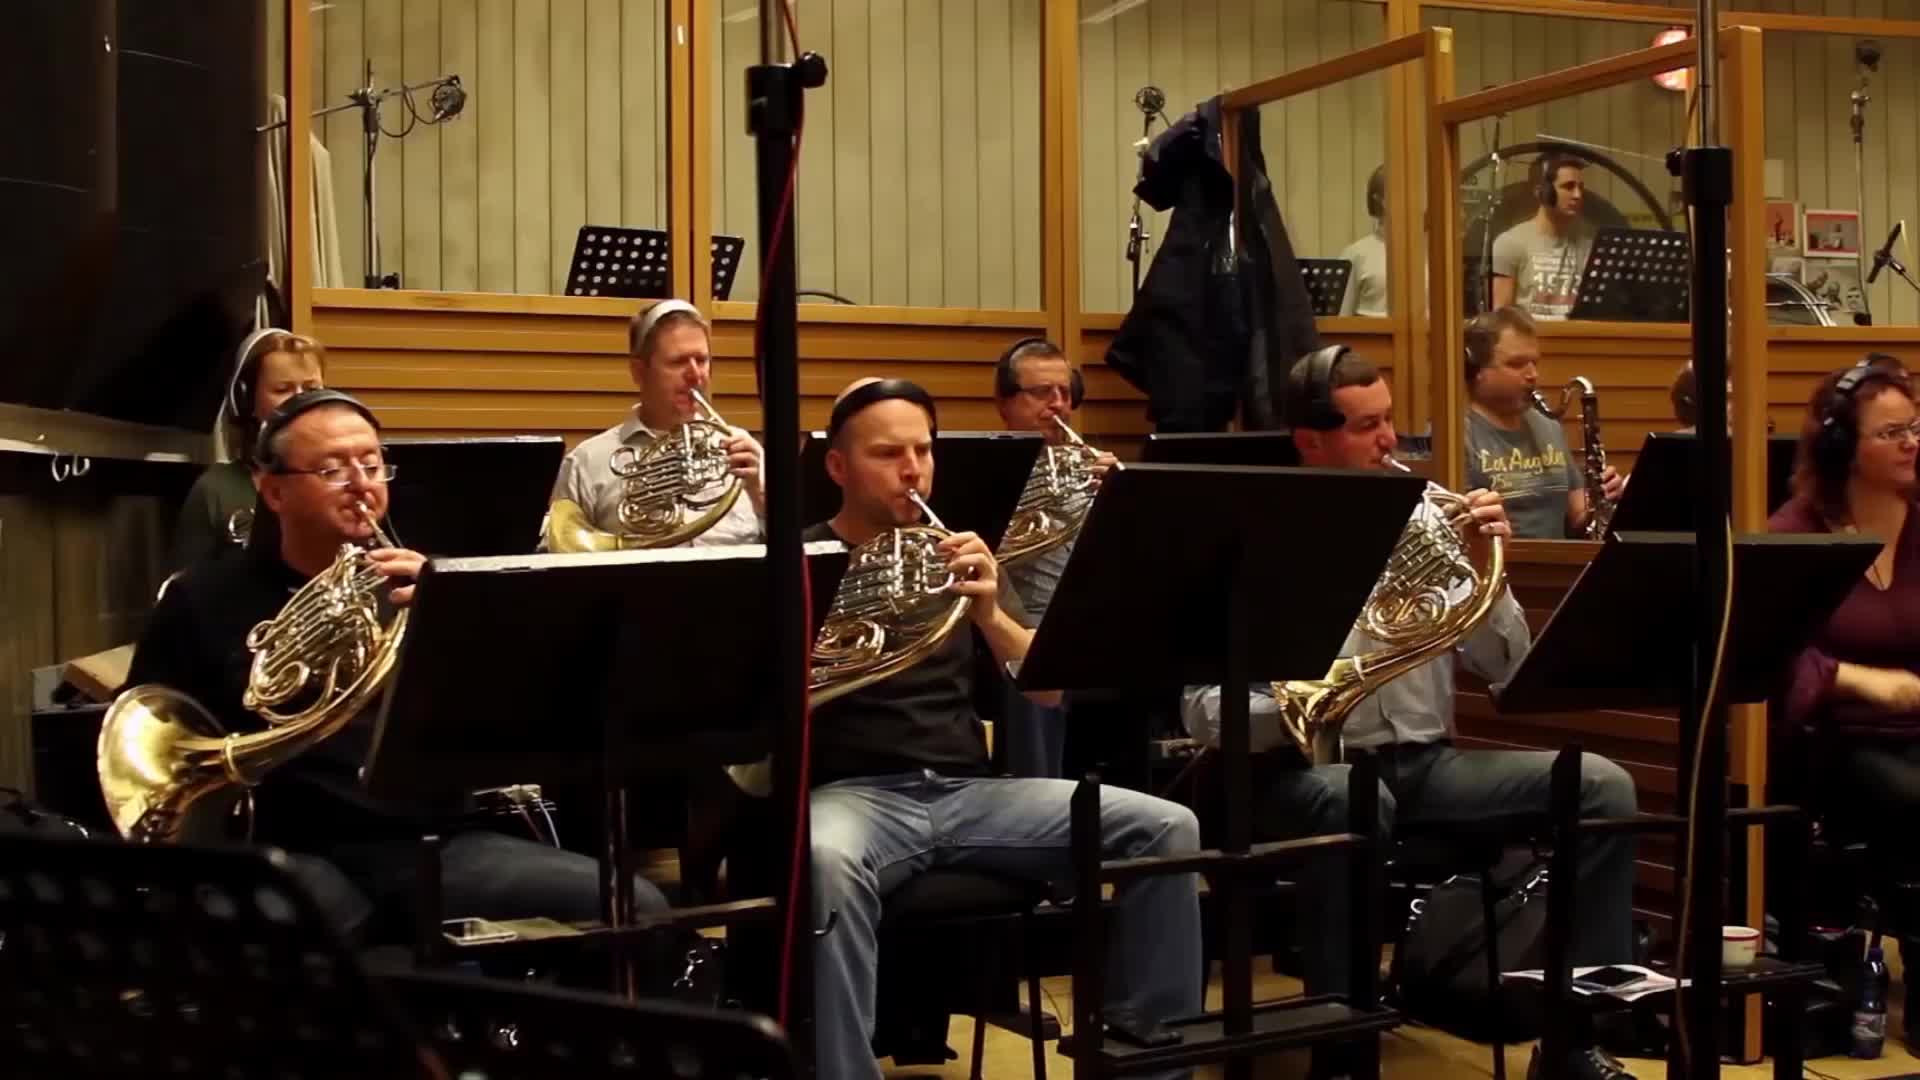 Mario + Rabbids: Kingdom Battle - Orchestra Behind the Scenes